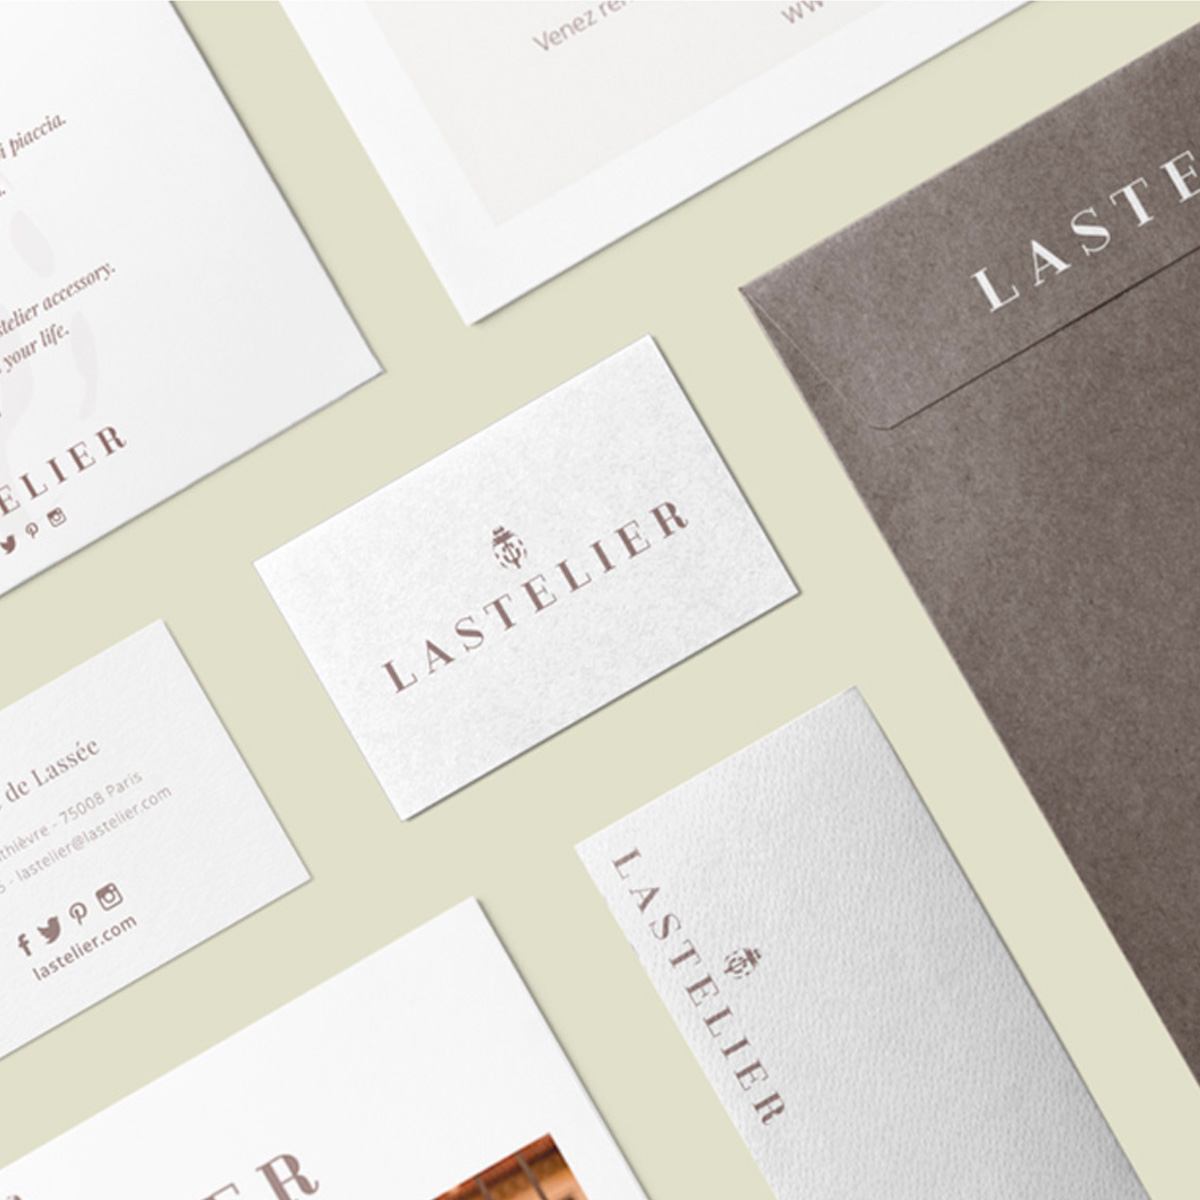 Lastelier - brand identity